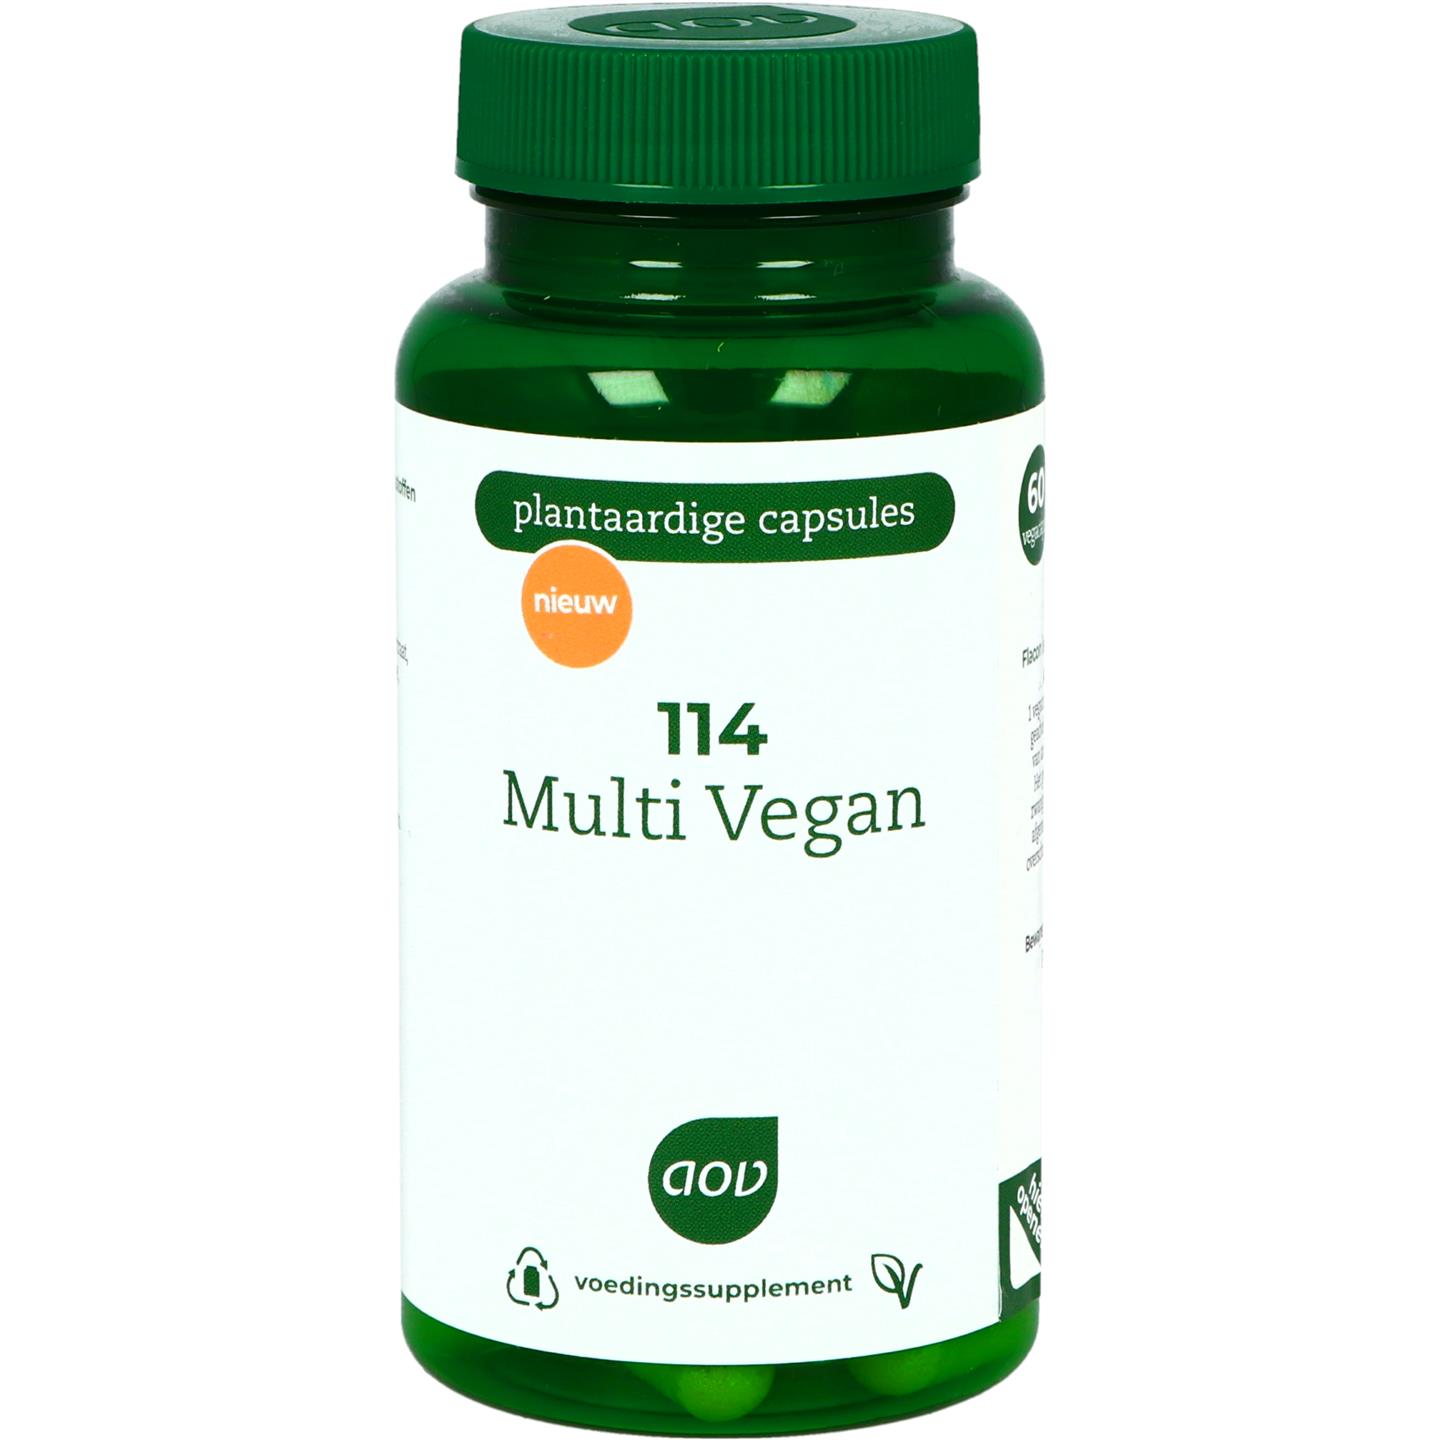 114 Multi Vegan